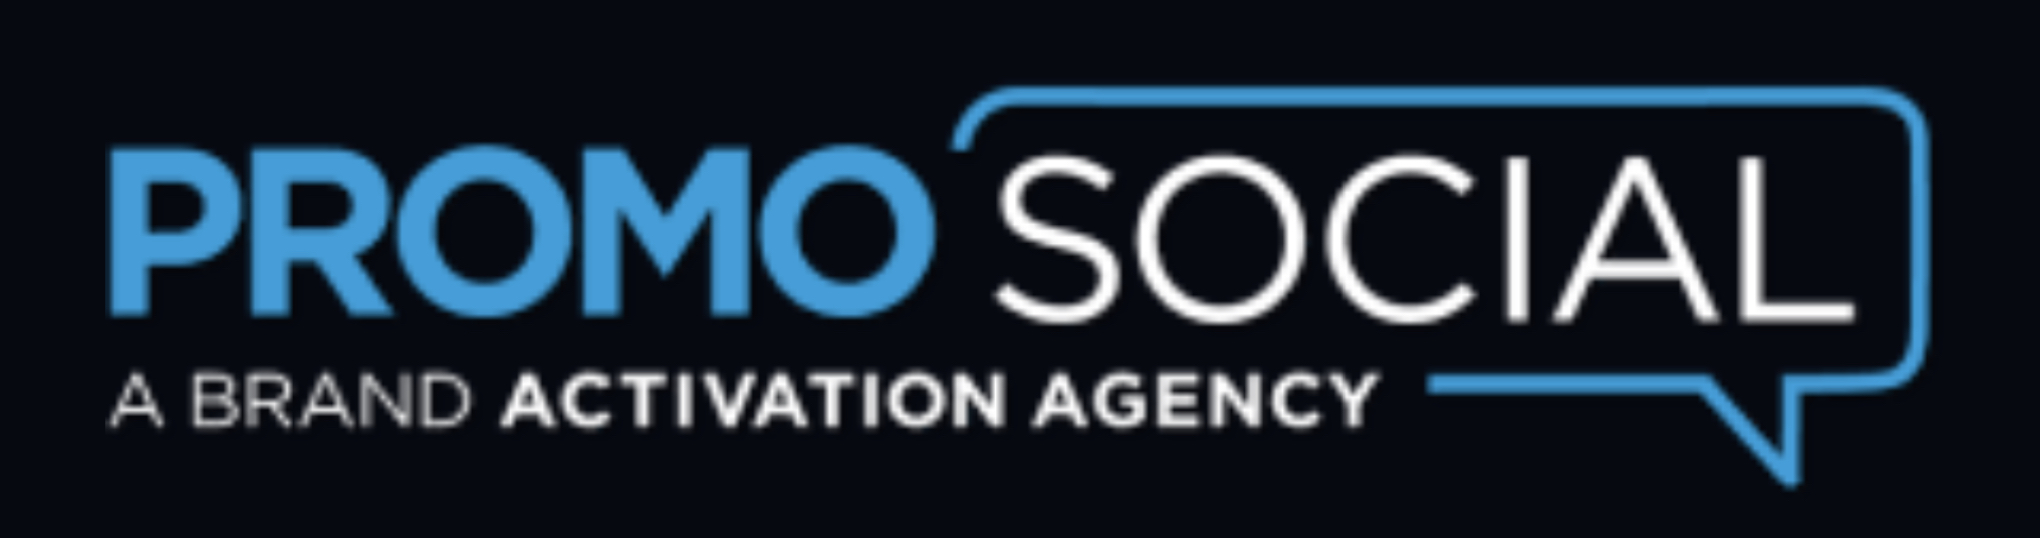 Promo-Social-New-York-City-Brand-Activation-Agency-Logo.jpg